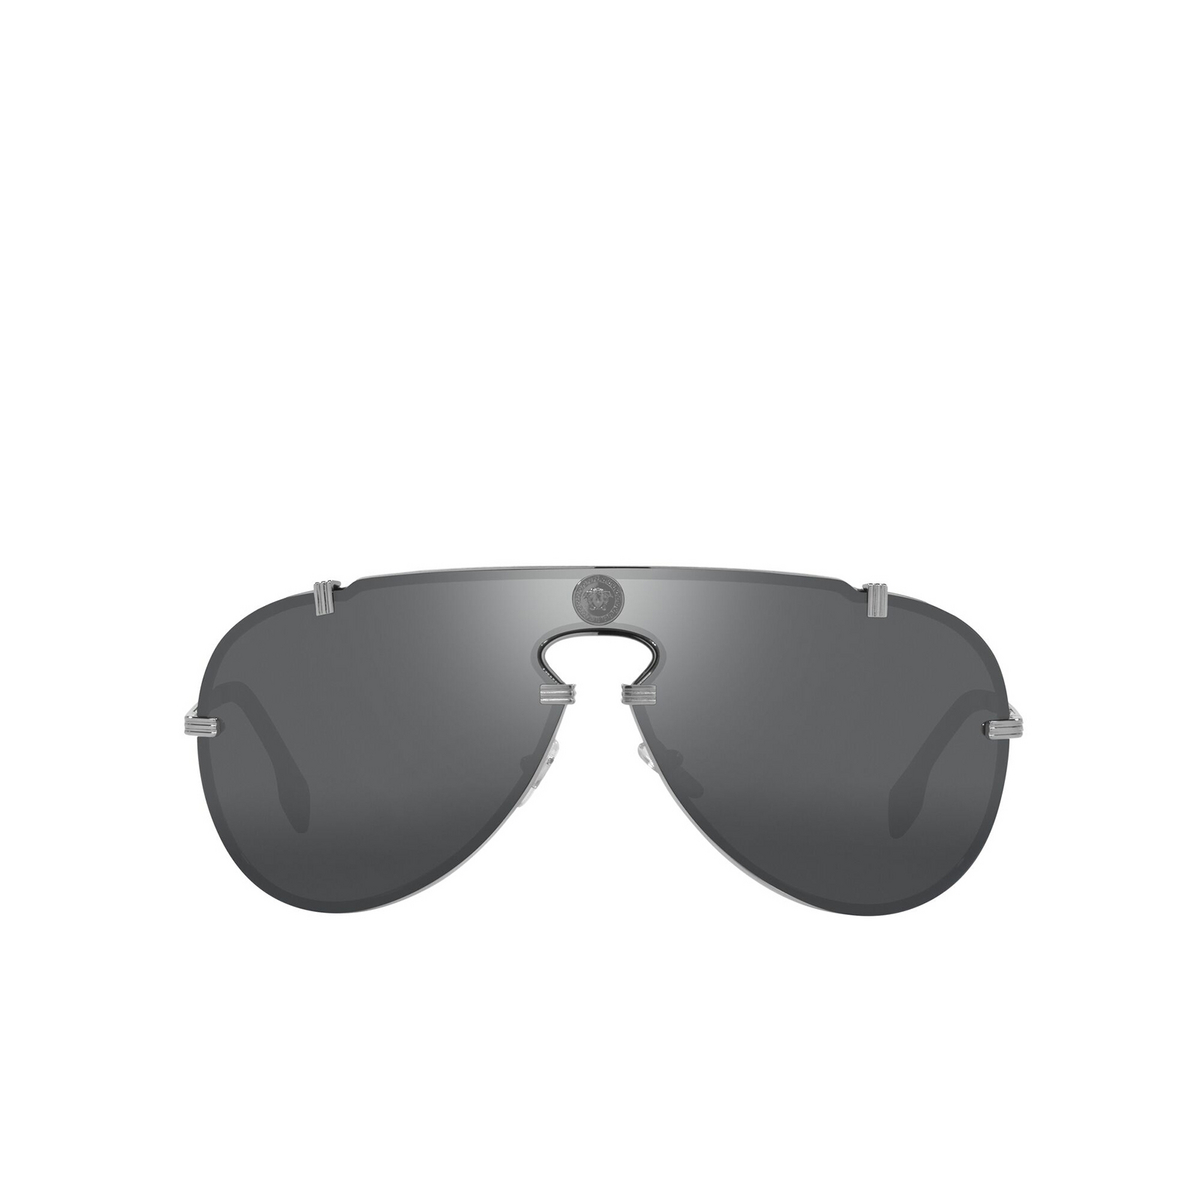 Versace® Aviator Sunglasses: VE2243 color Gunmetal 10016G - front view.